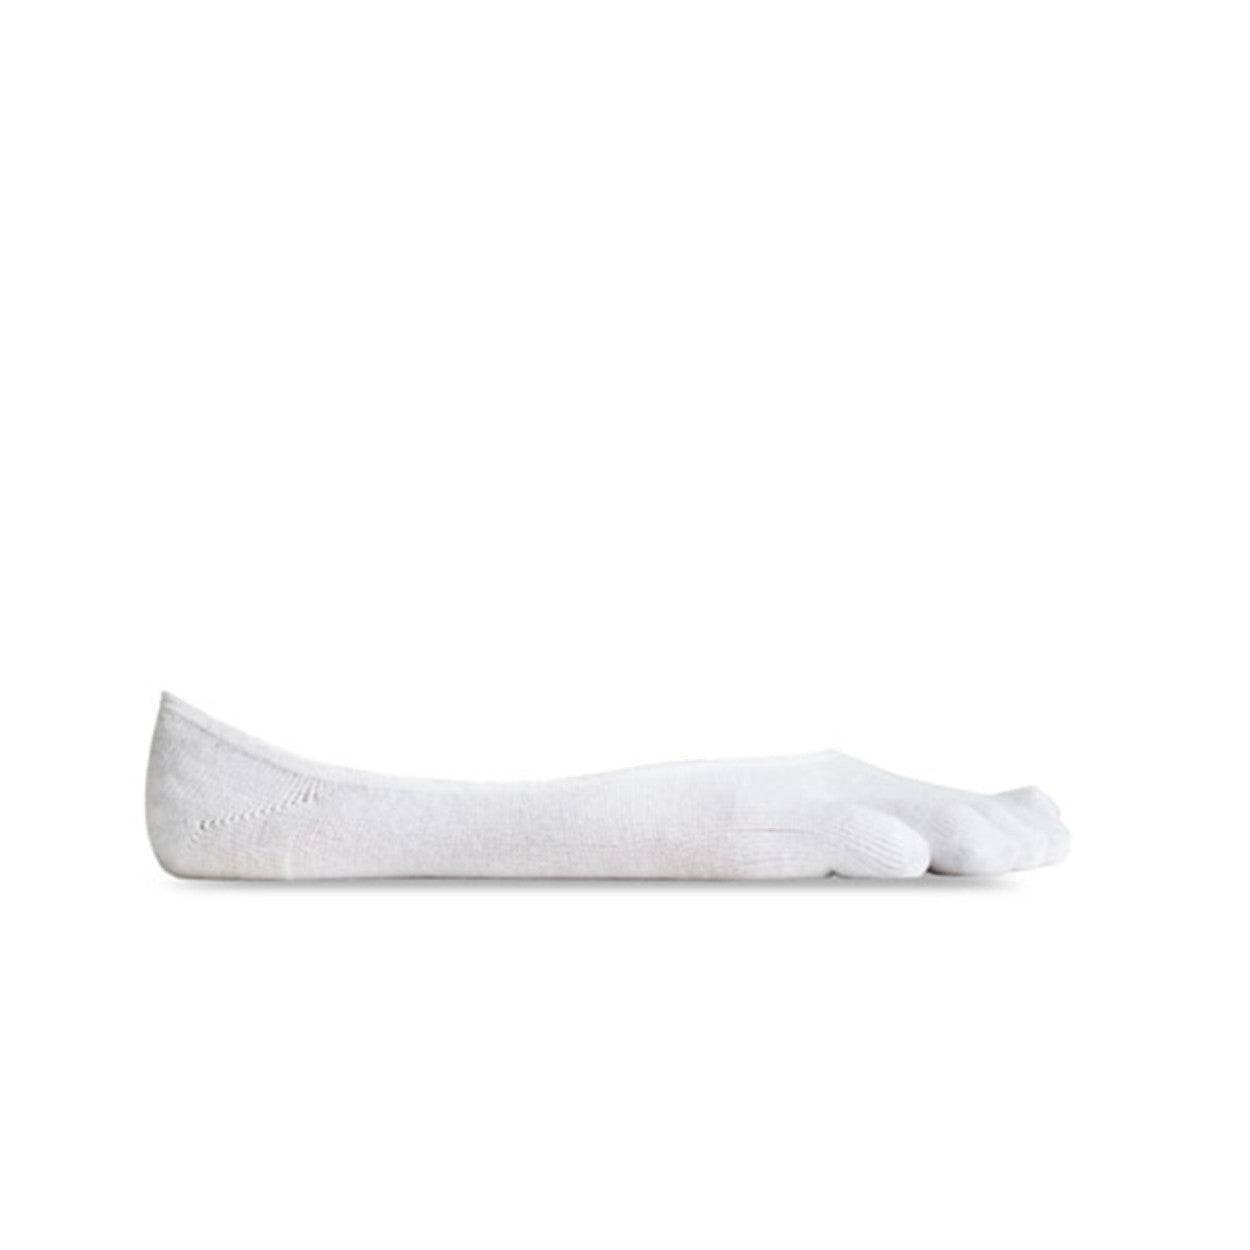 Vibram Toe Socks - Vibram Ghost Low Profile Toe Socks White - Barefoot Junkie - Socks